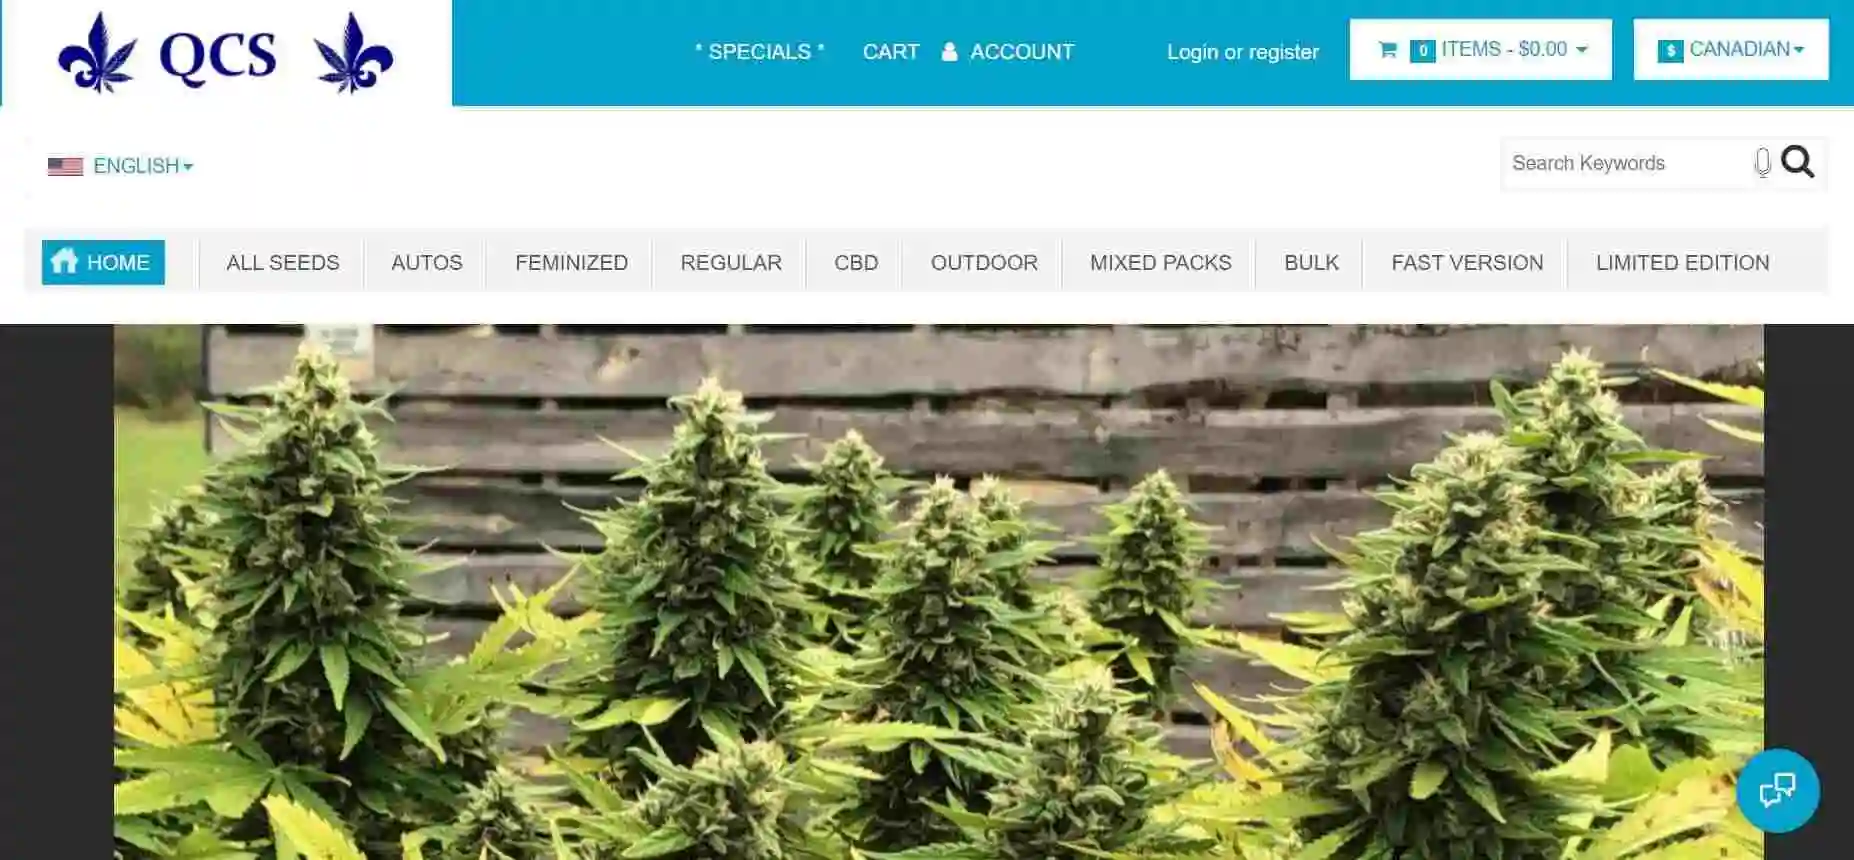 Quebec Cannabis Seeds Review